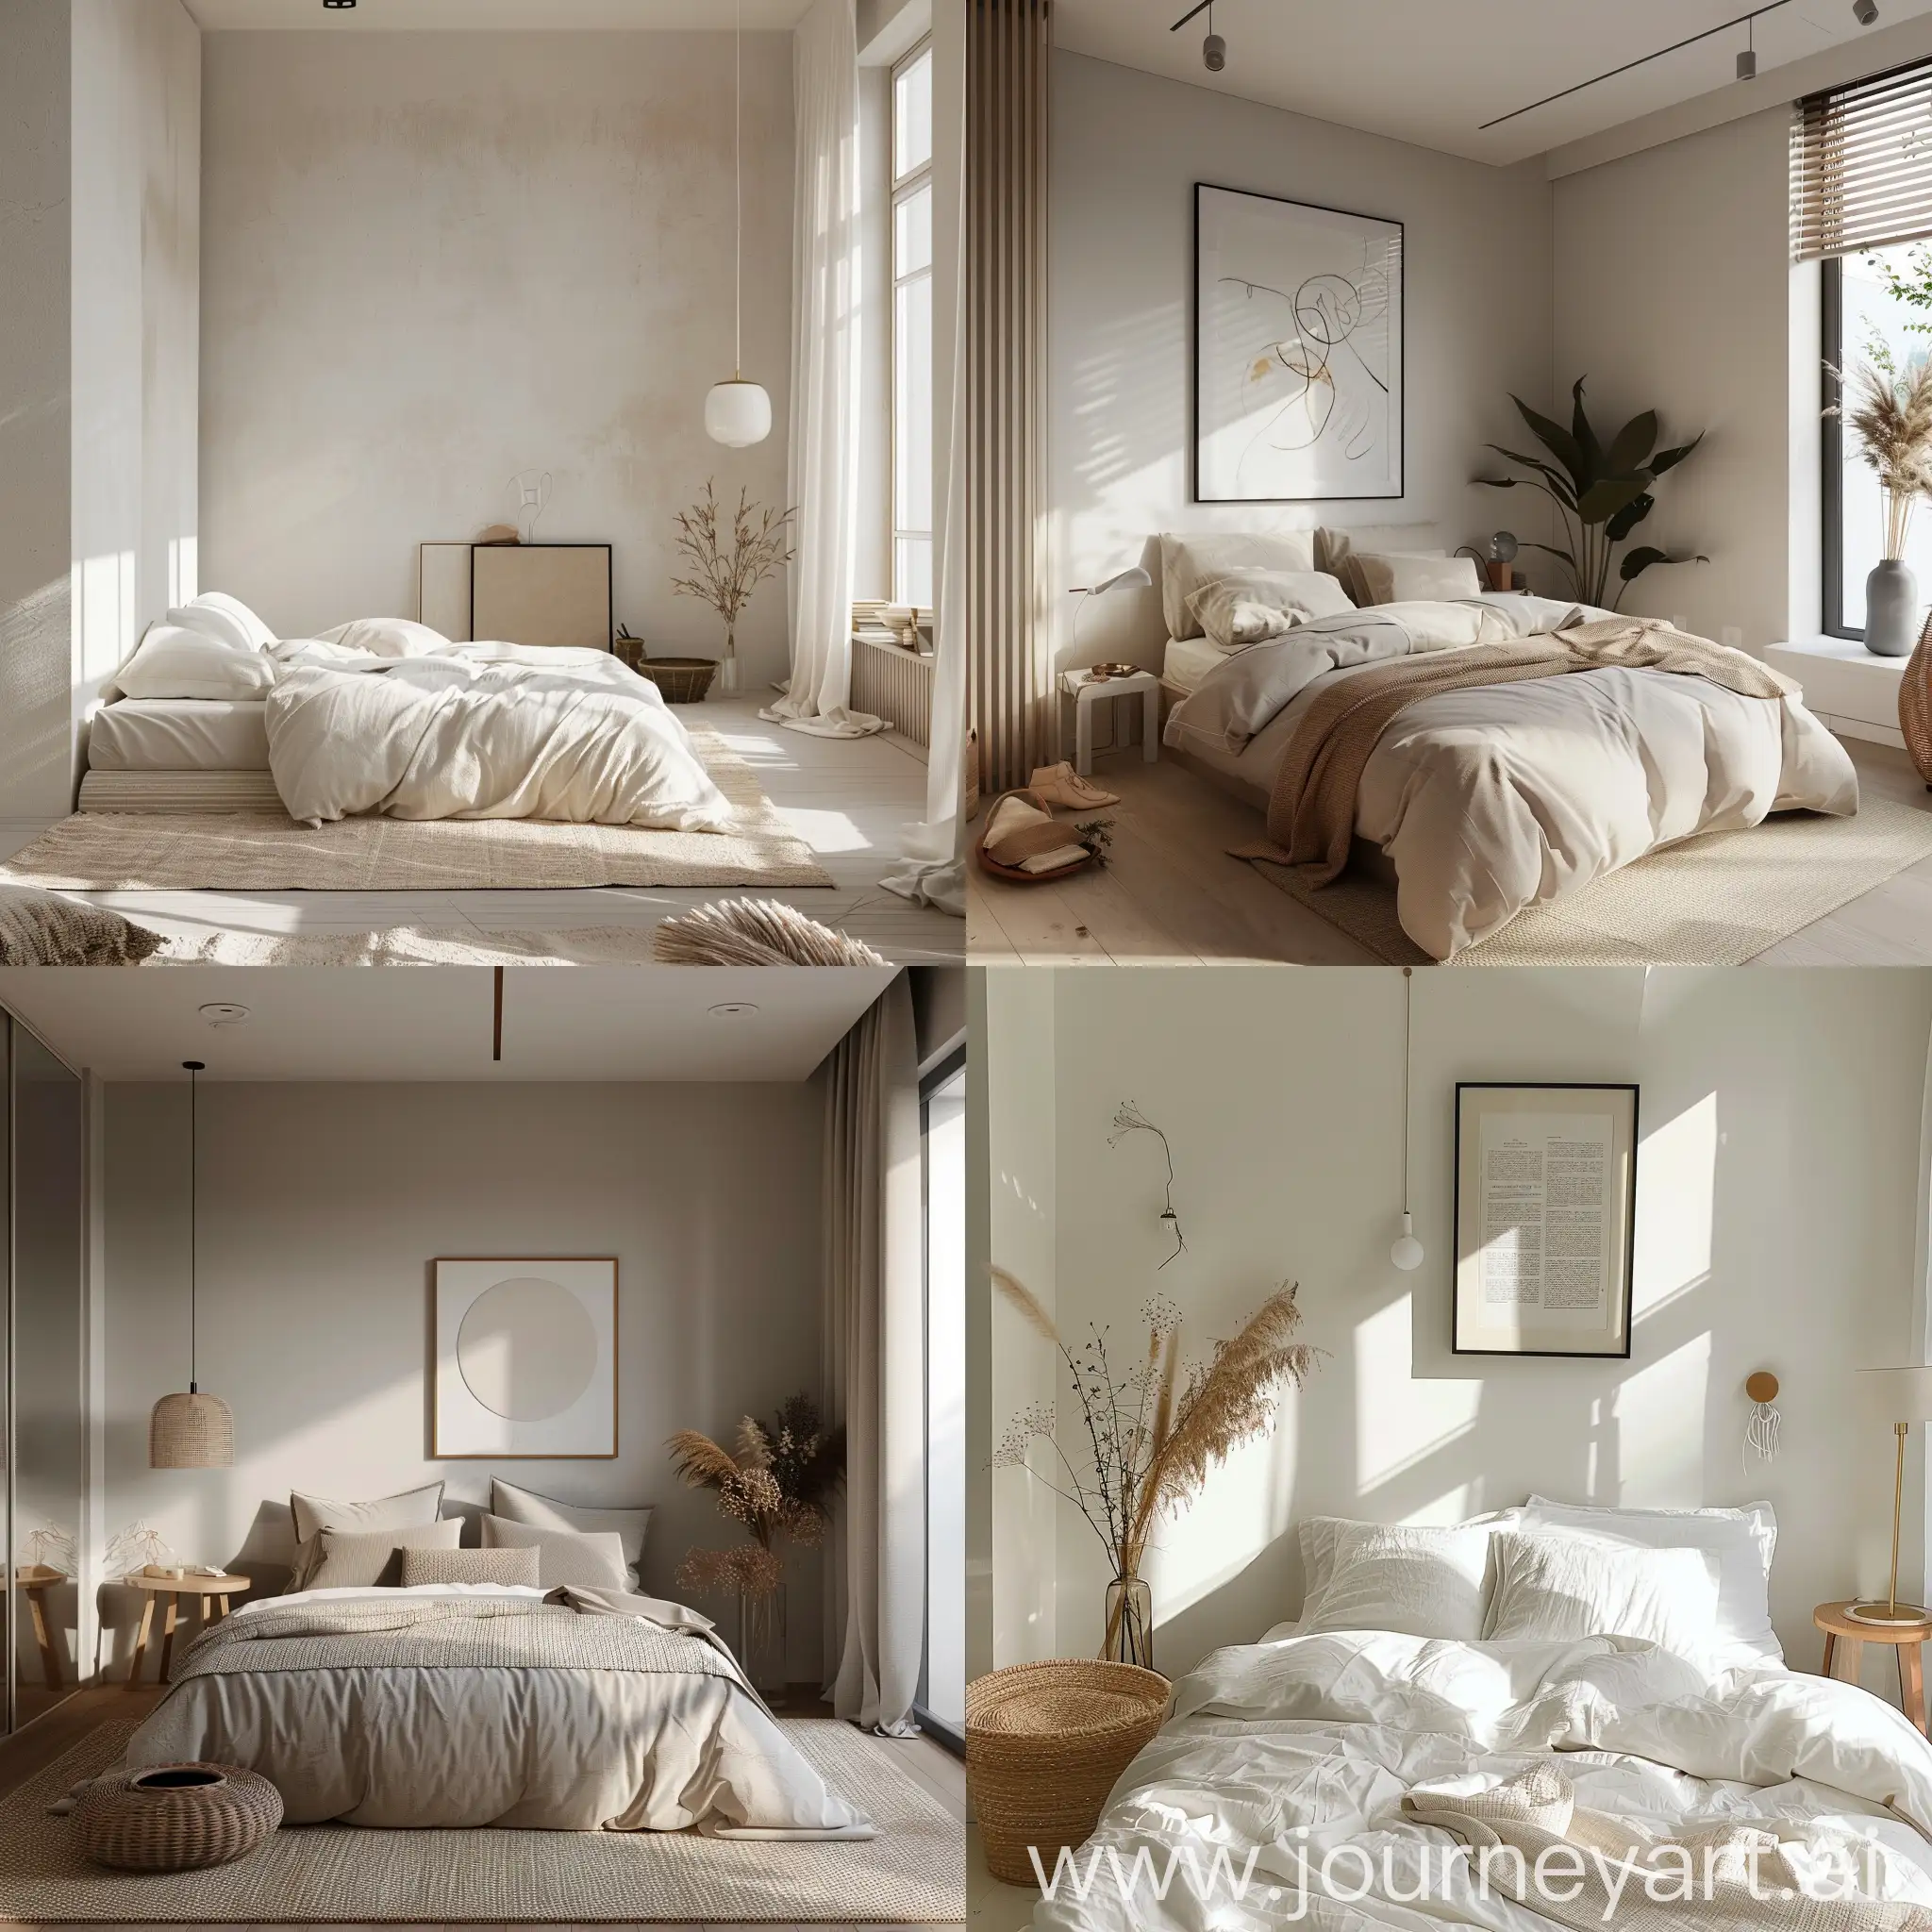 Minimalistic-Bedroom-Interior-with-Clean-Design